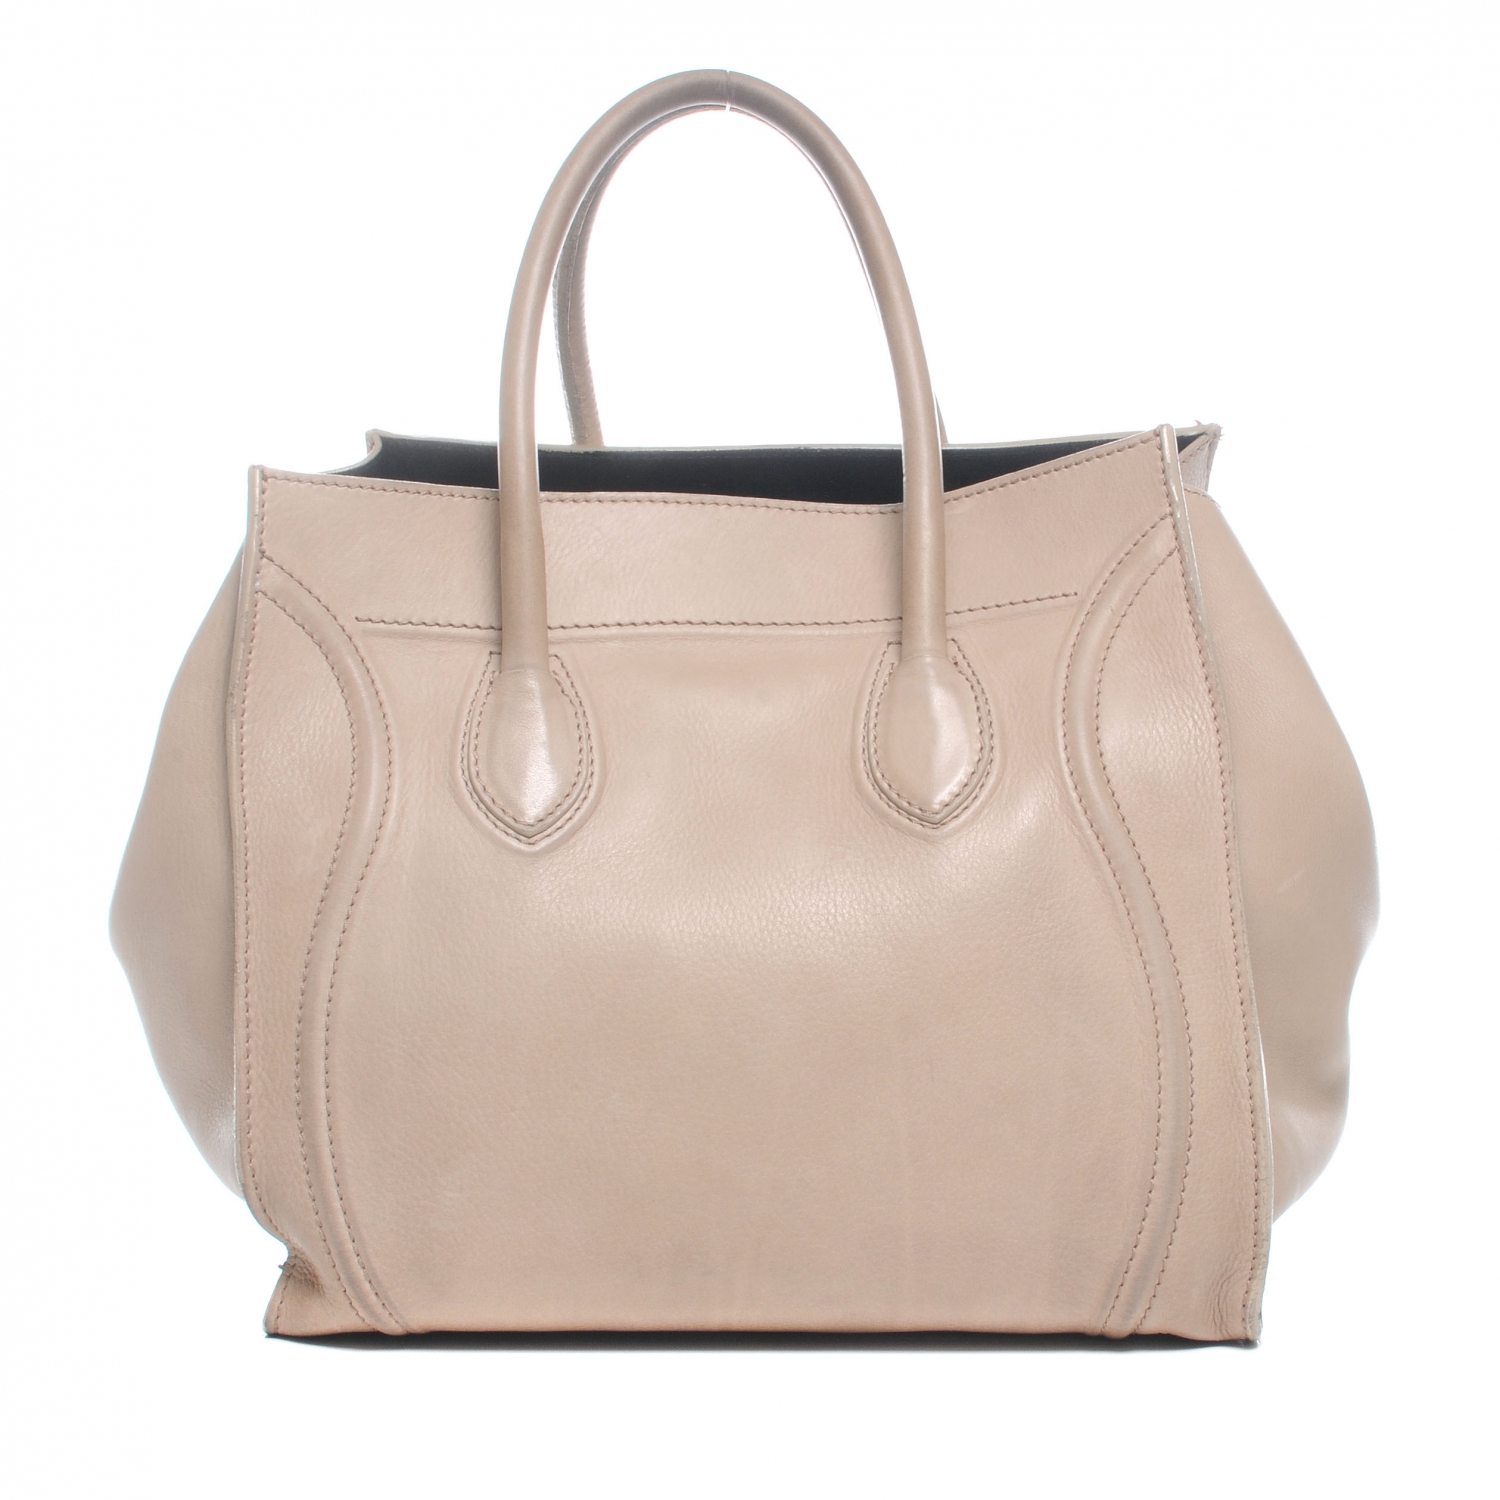 CELINE Smooth Leather Medium Phantom Luggage Bag Taupe 45921 | FASHIONPHILE